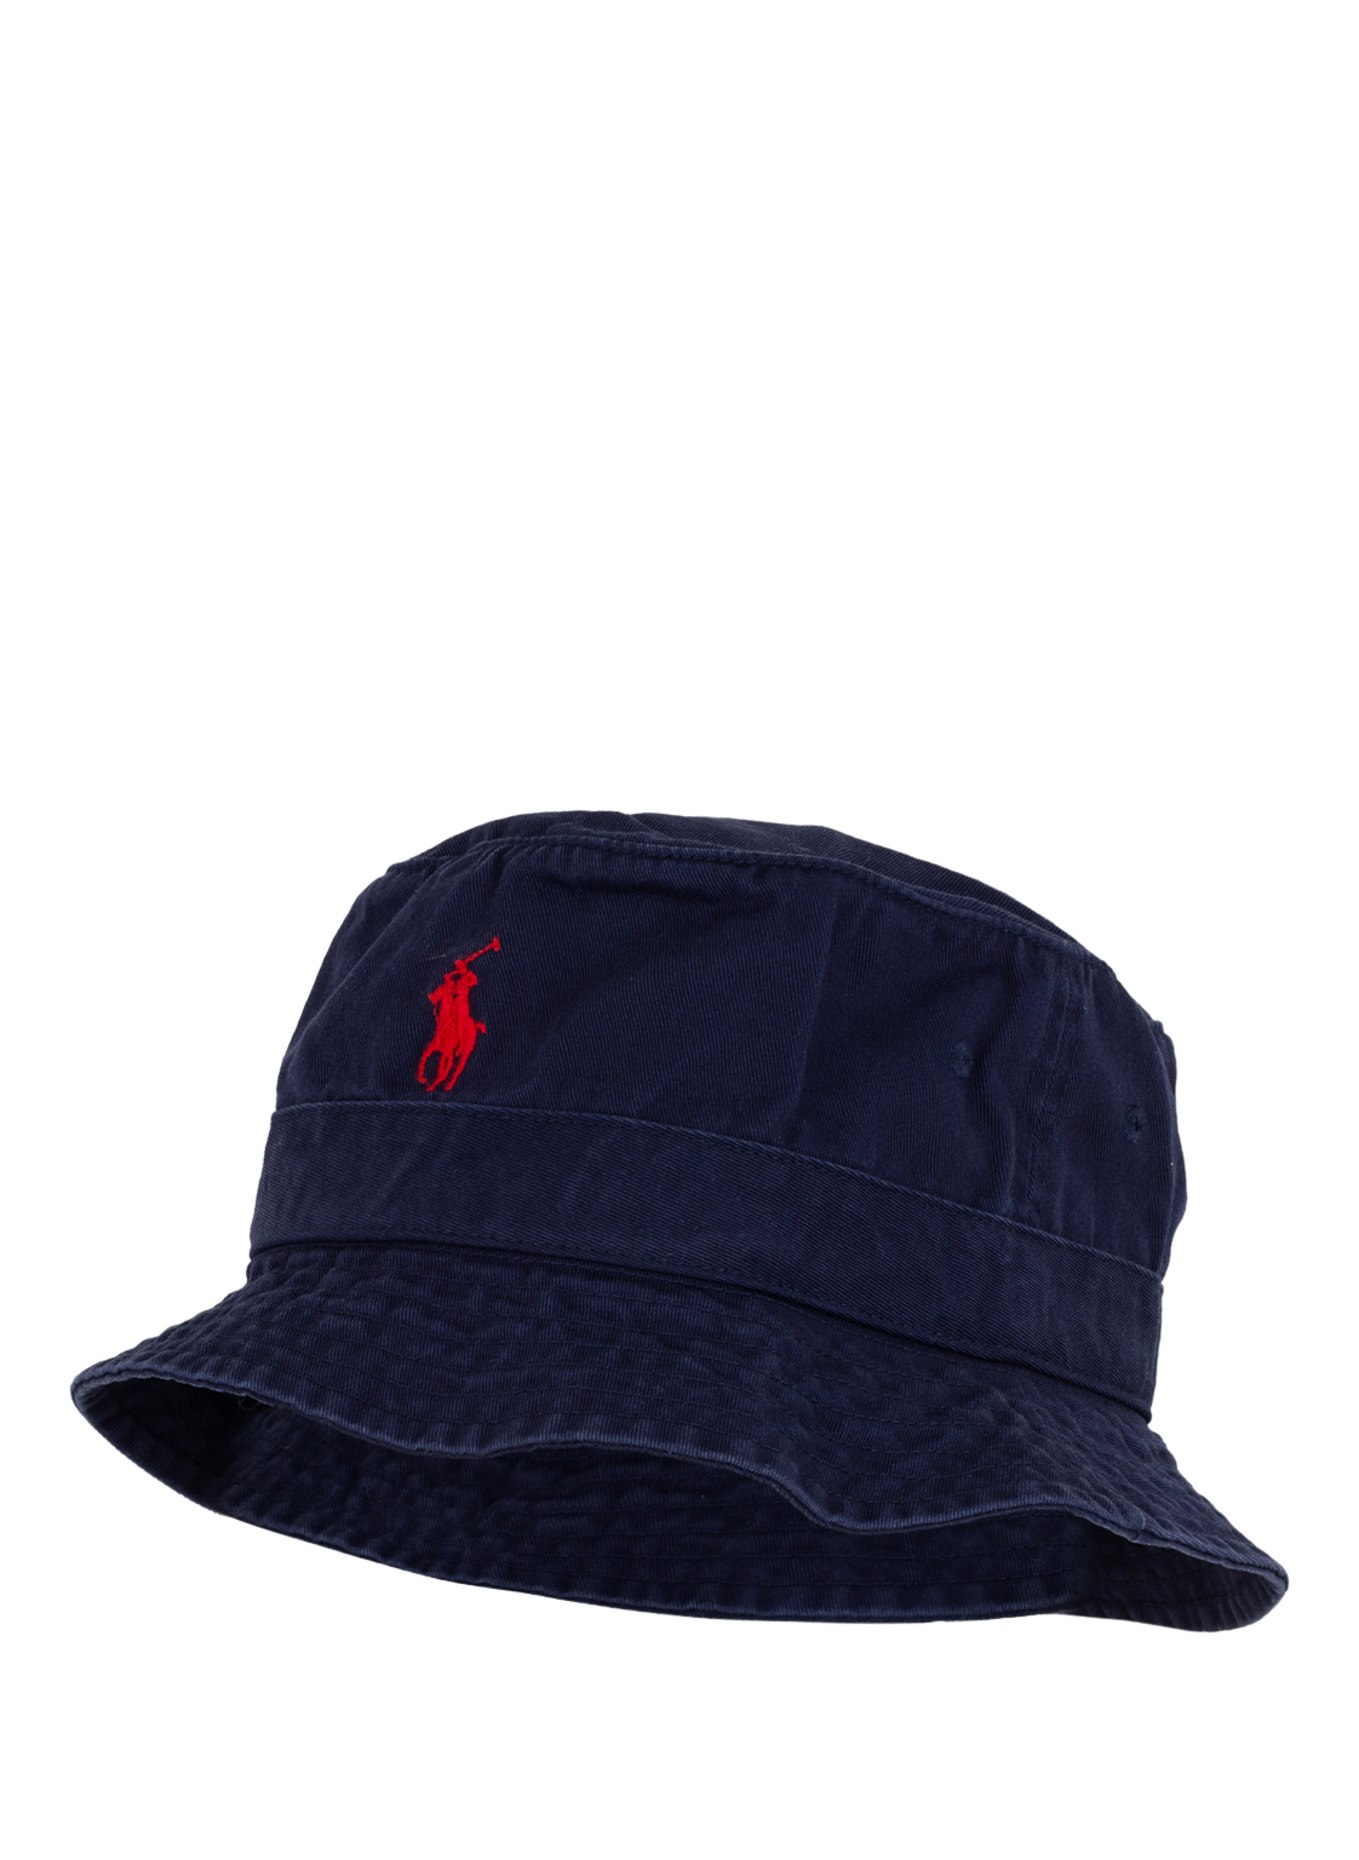 POLO RALPH LAUREN Bucket hat in dark blue